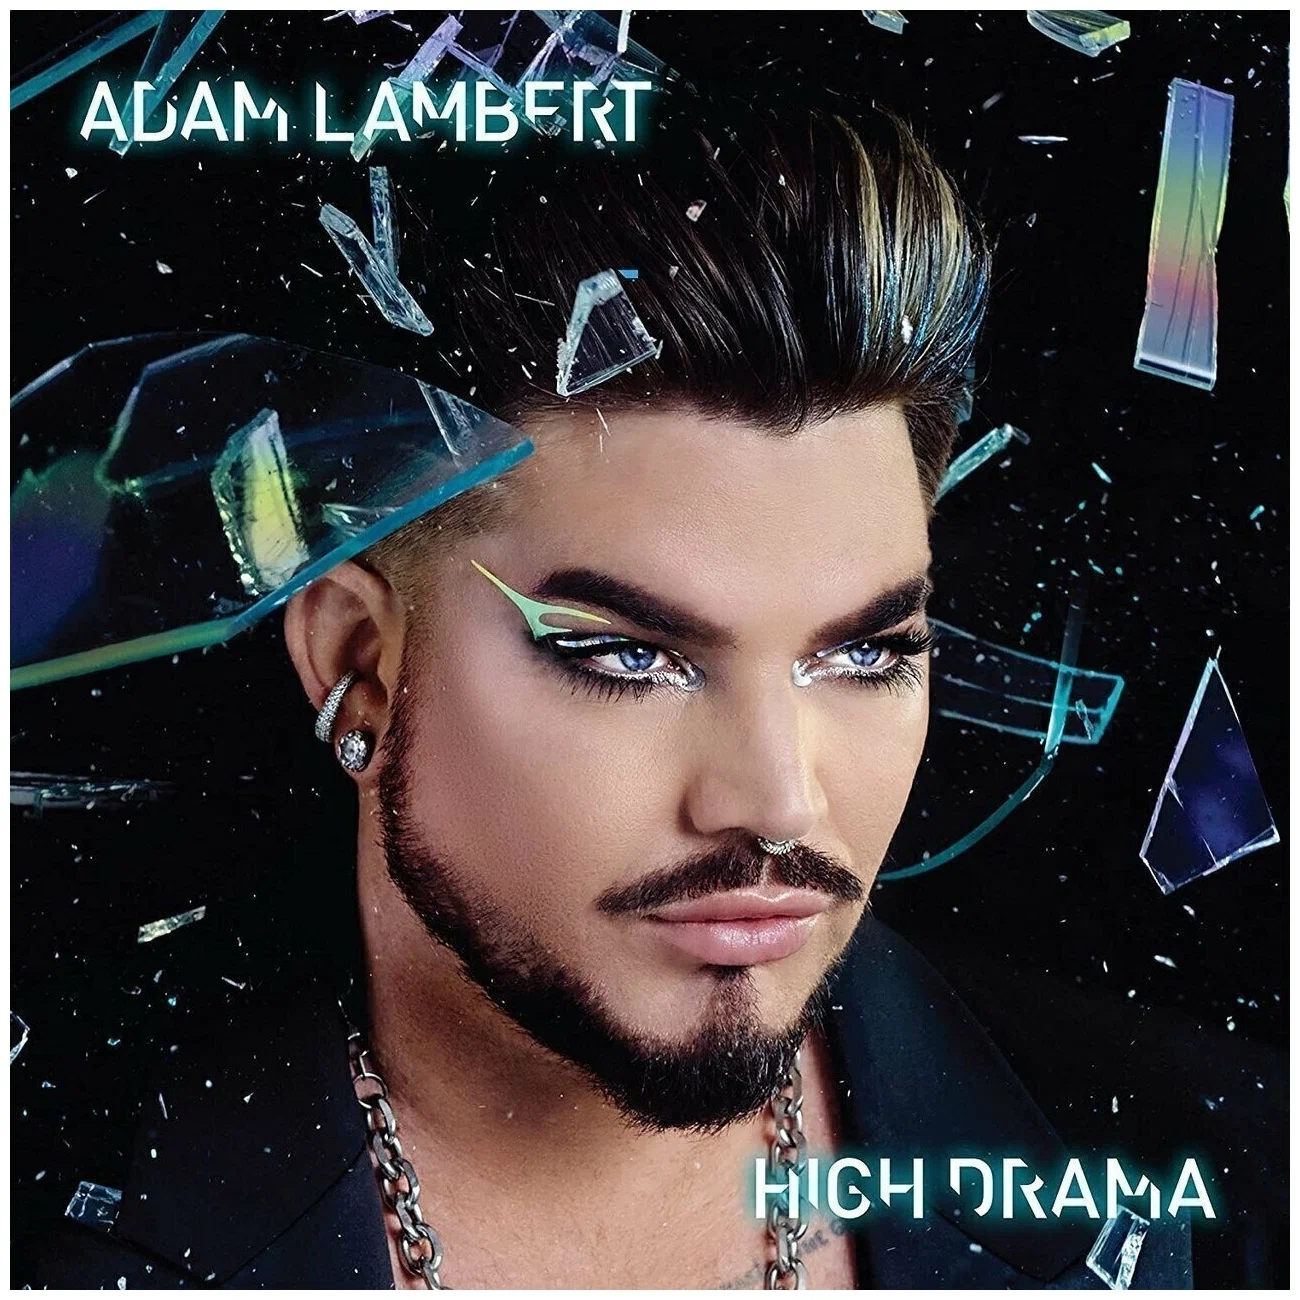 виниловая пластинка lambert adam high drama 5054197308611 Виниловая Пластинка Lambert, Adam, High Drama (5054197308611)